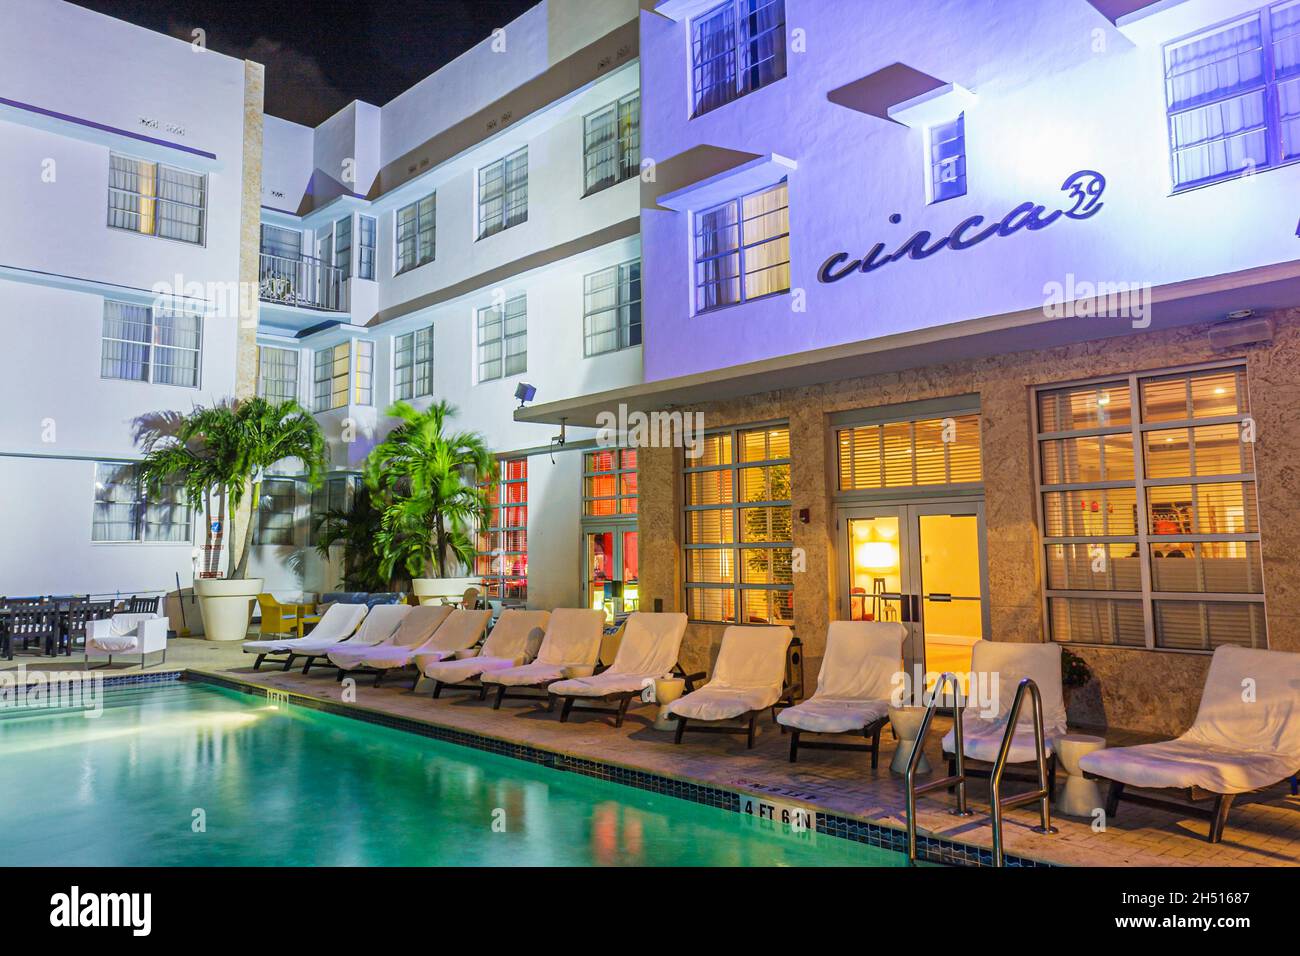 Miami Beach Florida,Collins Avenue,Circa 39 hotel,boutique art deco style swimming pooldeck lounge chairs night property Stock Photo